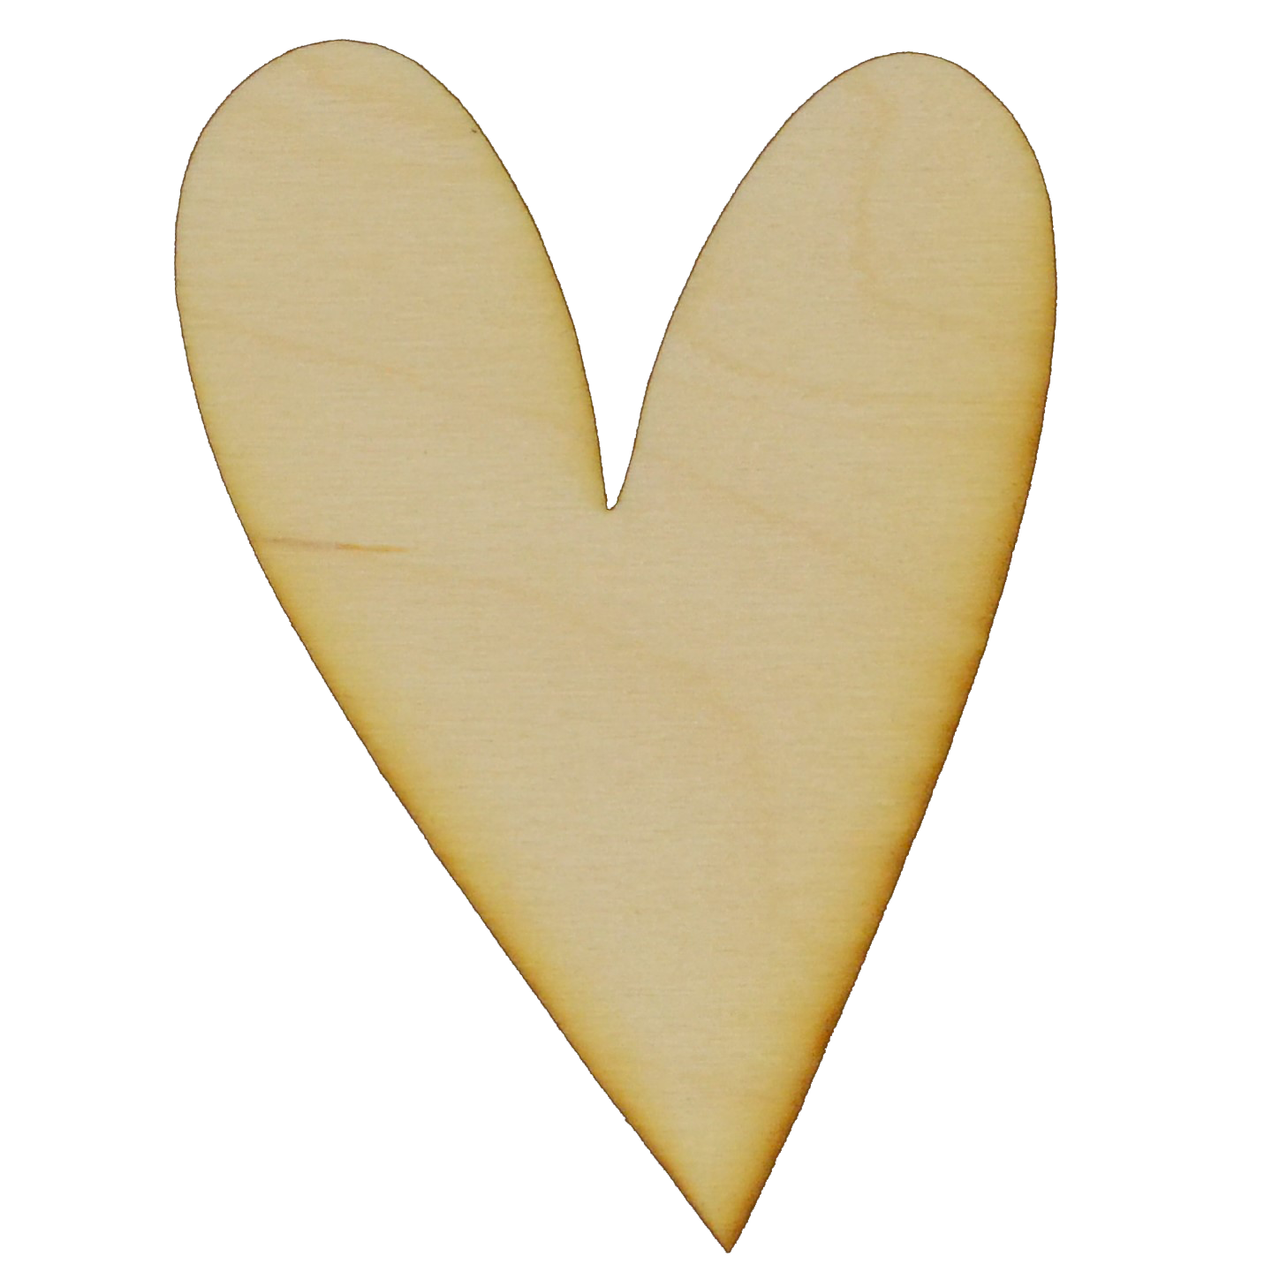 Whimsical Heart Wood Cutout - Jumbo 13.25 x 18 1/4 Baltic Birch Plywood